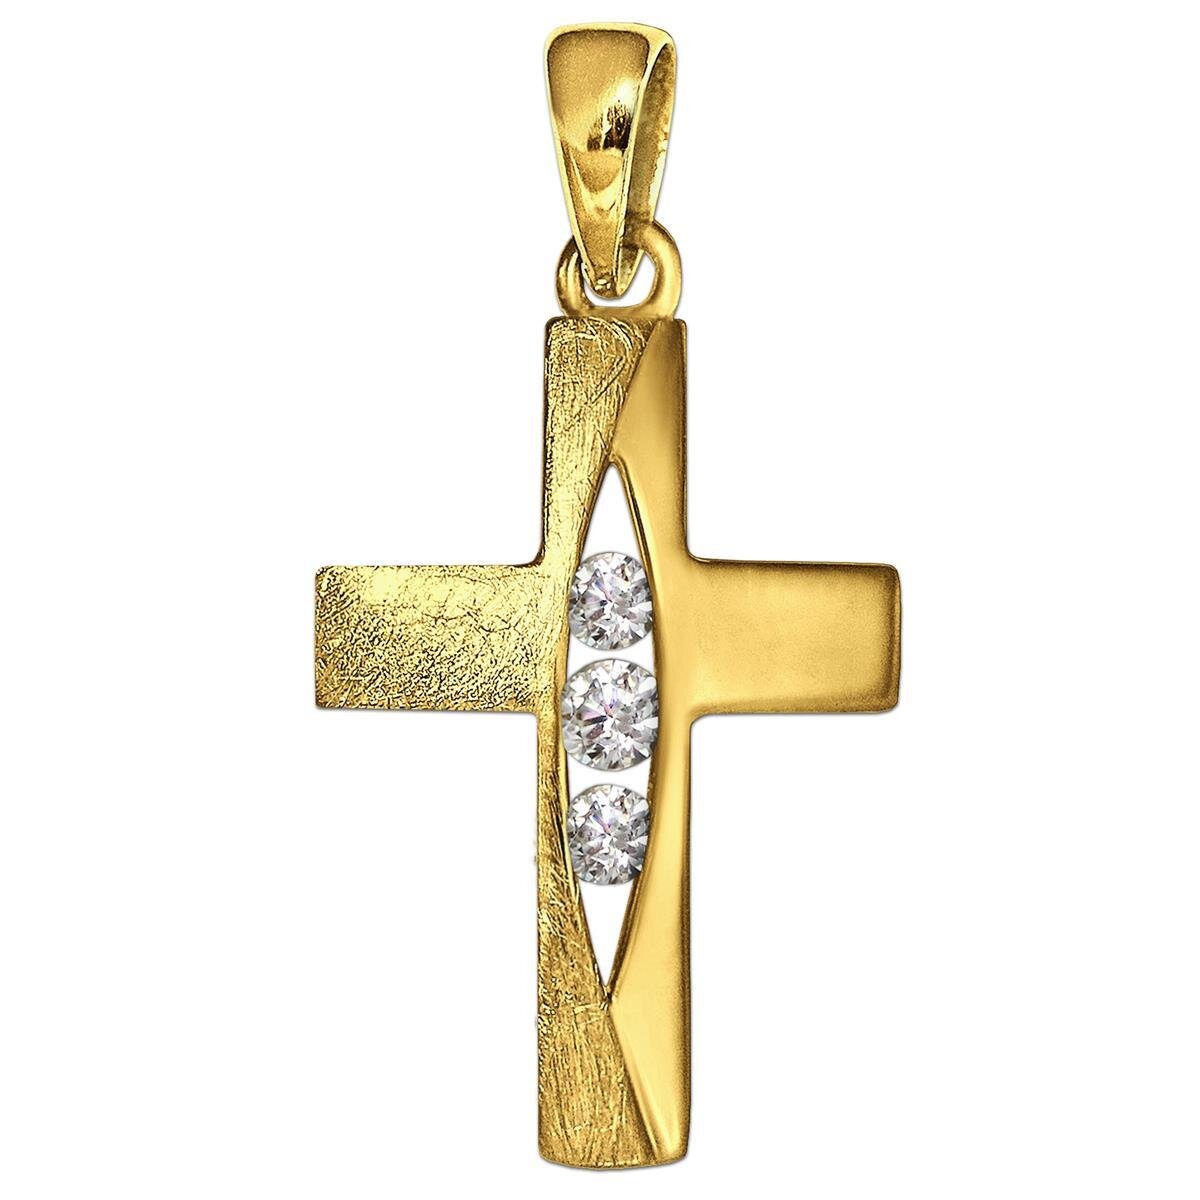 Goldenes Kreuz 16 mm mit 3 Zirkonia gl&auml;nzend matt gemustert 333 Gold